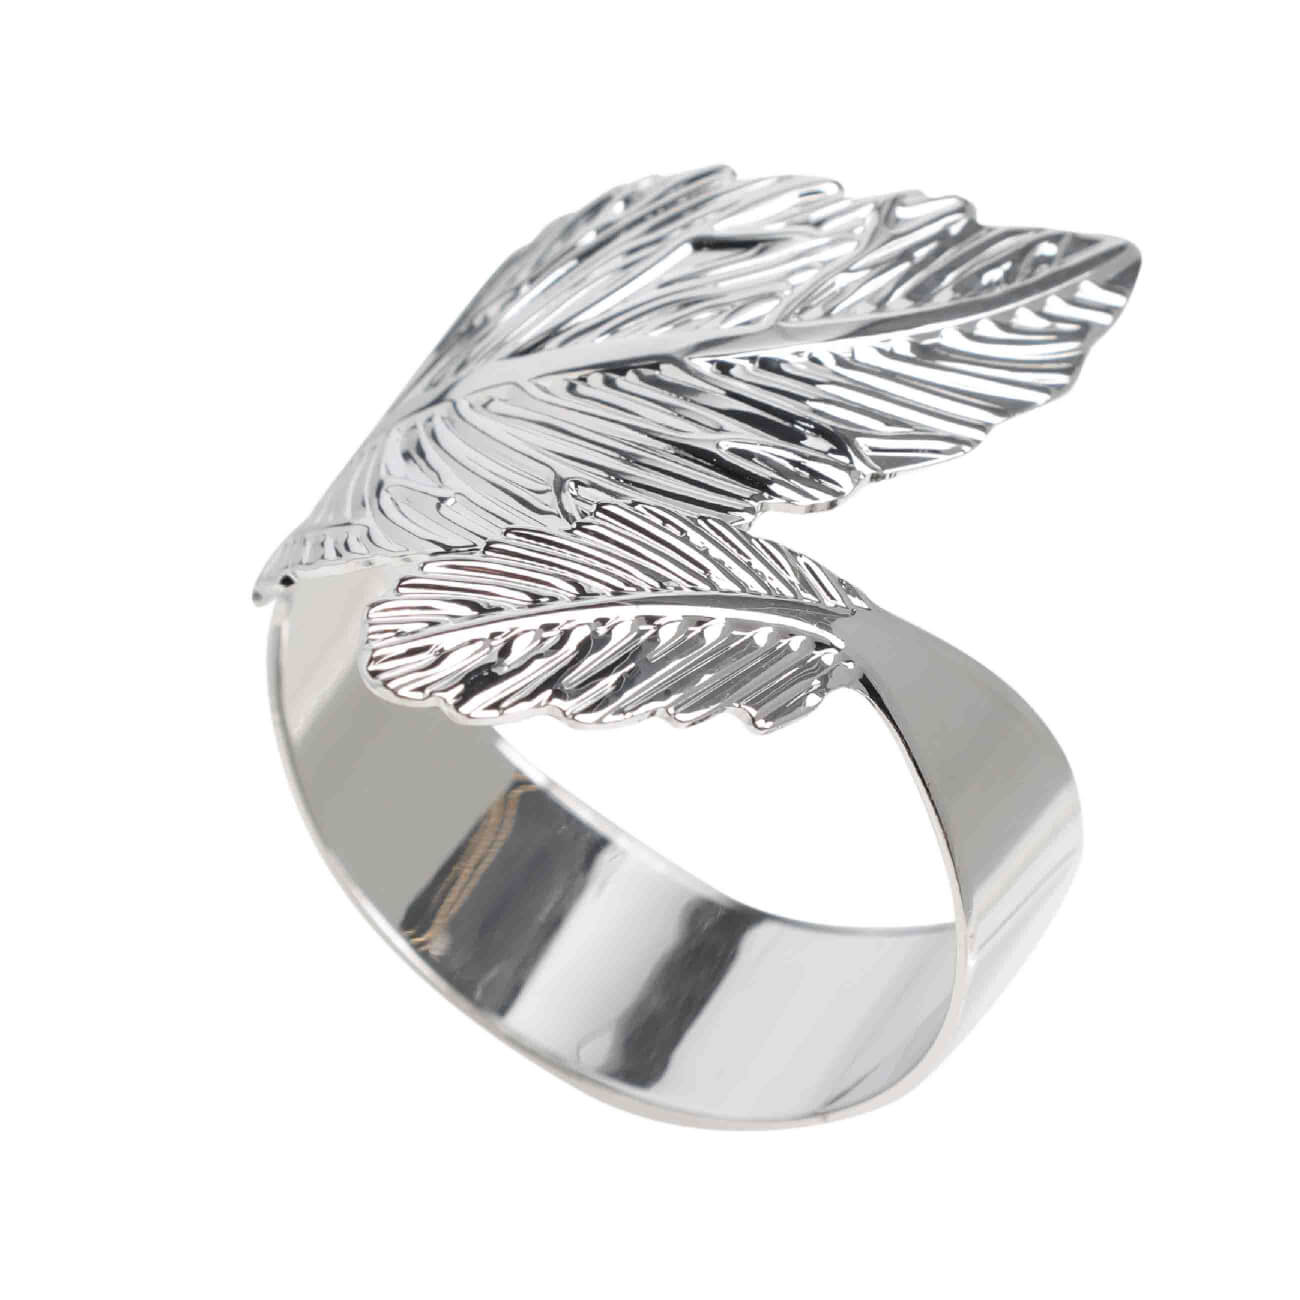 Кольцо для салфеток, 5 см, металл, серебристое, Листья, Print кольцо для карниза d 35 38 мм 10 шт серебряный